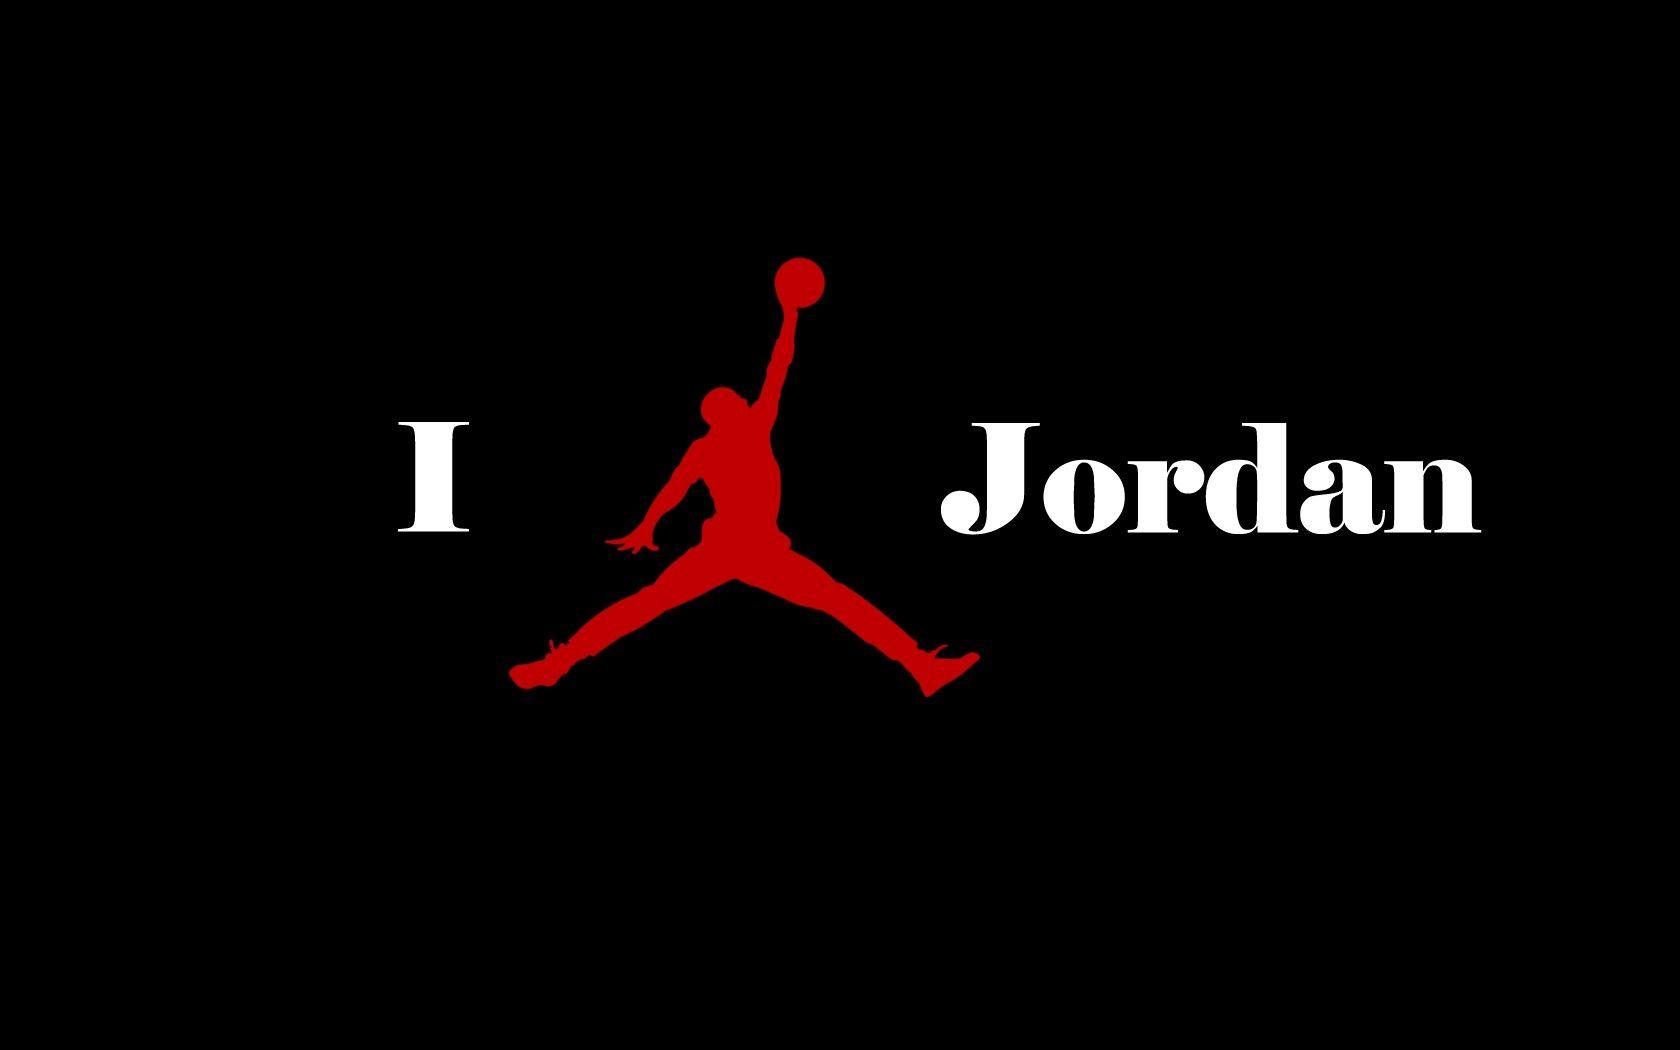 Michael jordan logo